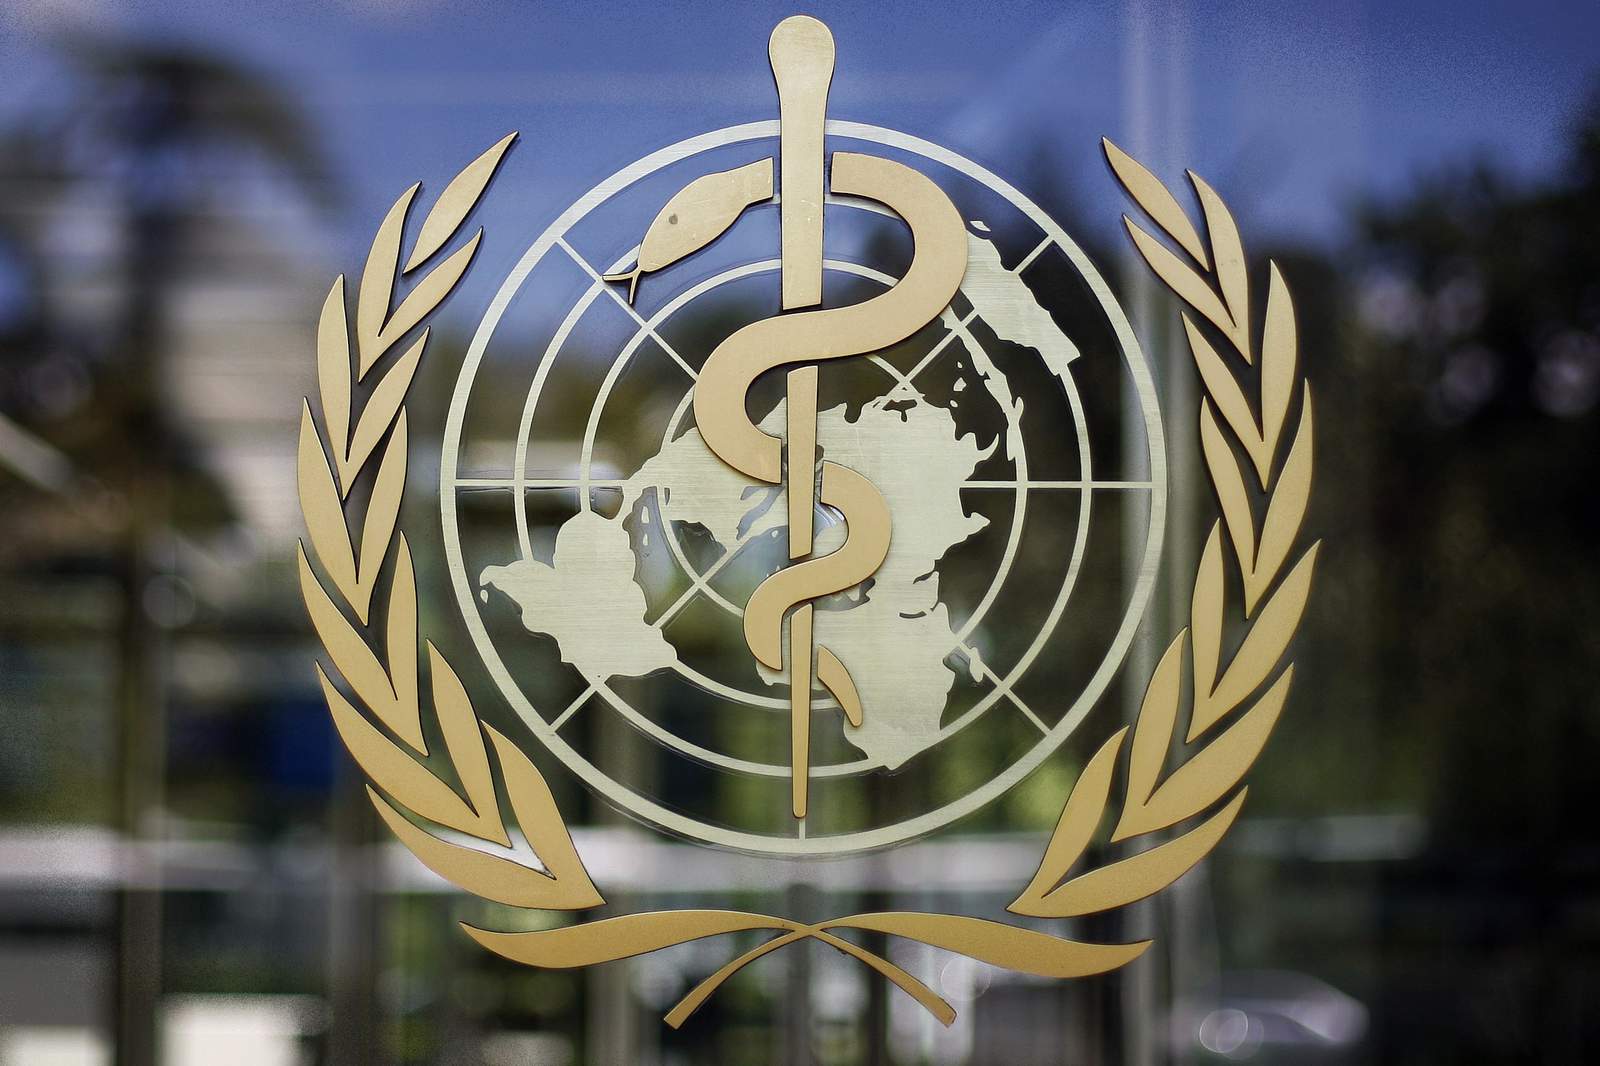 Internal email reveals 65 virus cases among WHO Geneva staff